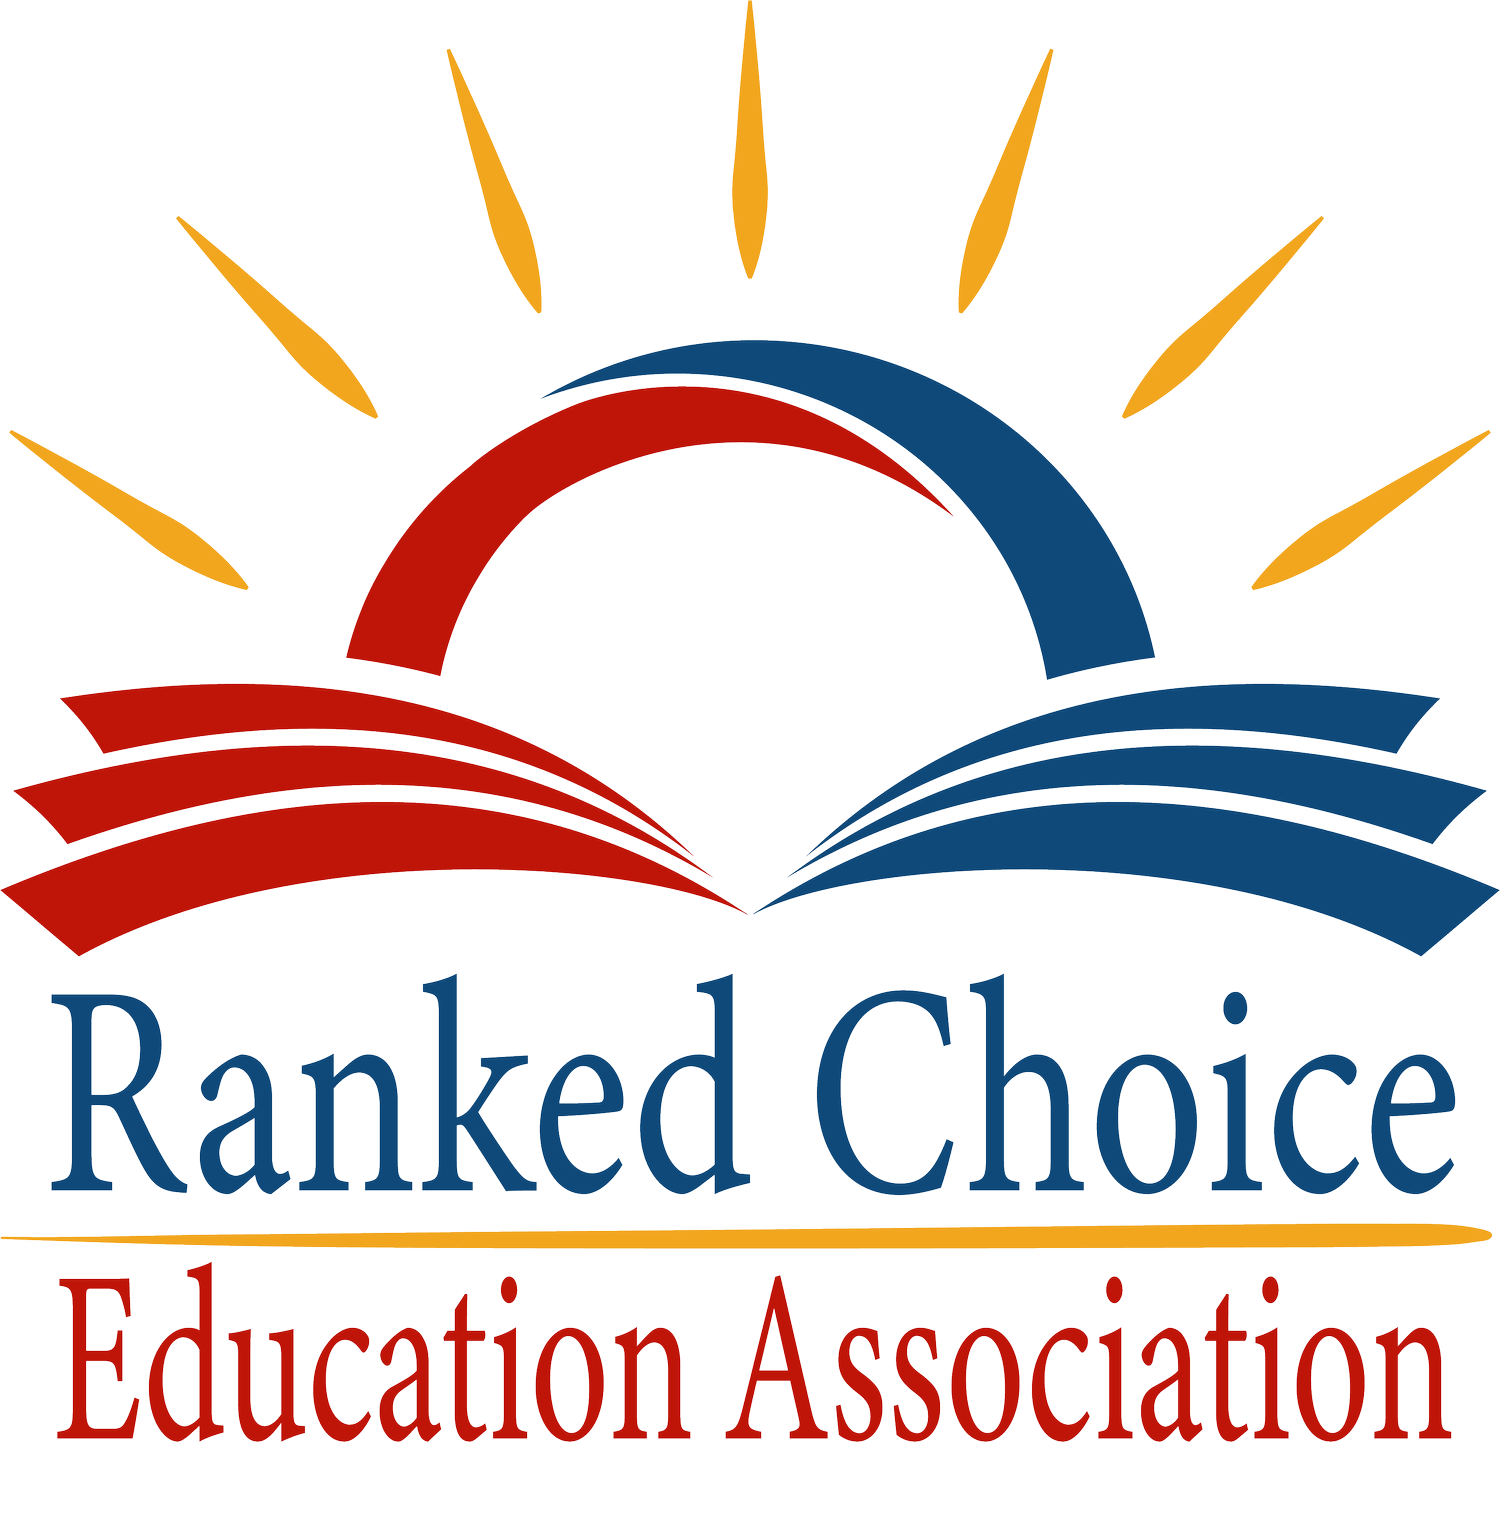 Ranked Choice Education Association